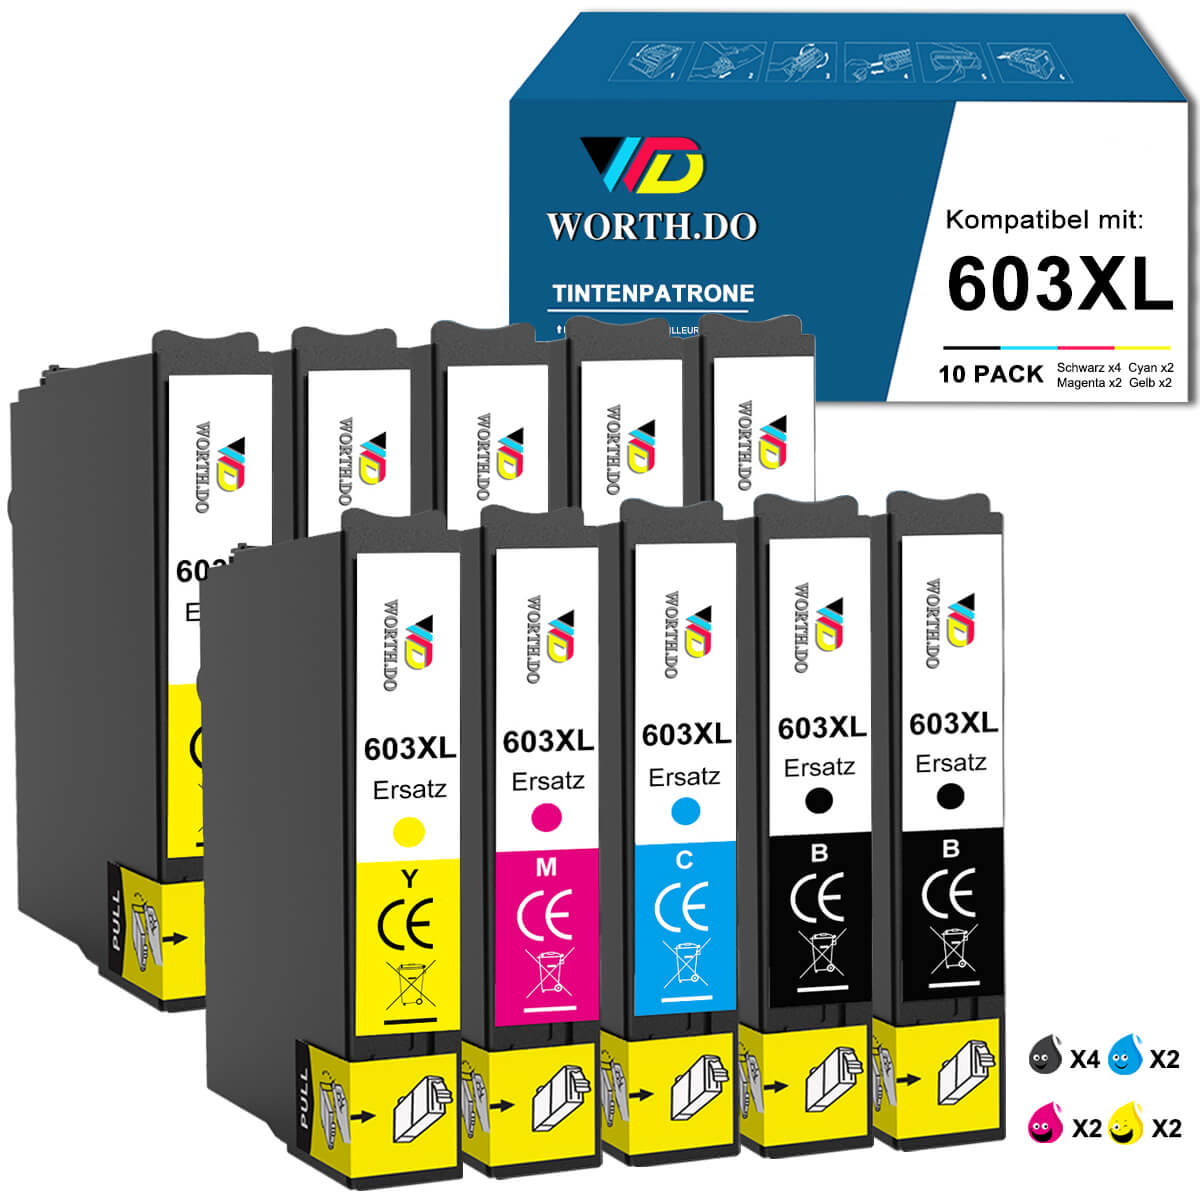    worthdo-kompatible-tintenpatronen-feur-epson-603xl-10pack